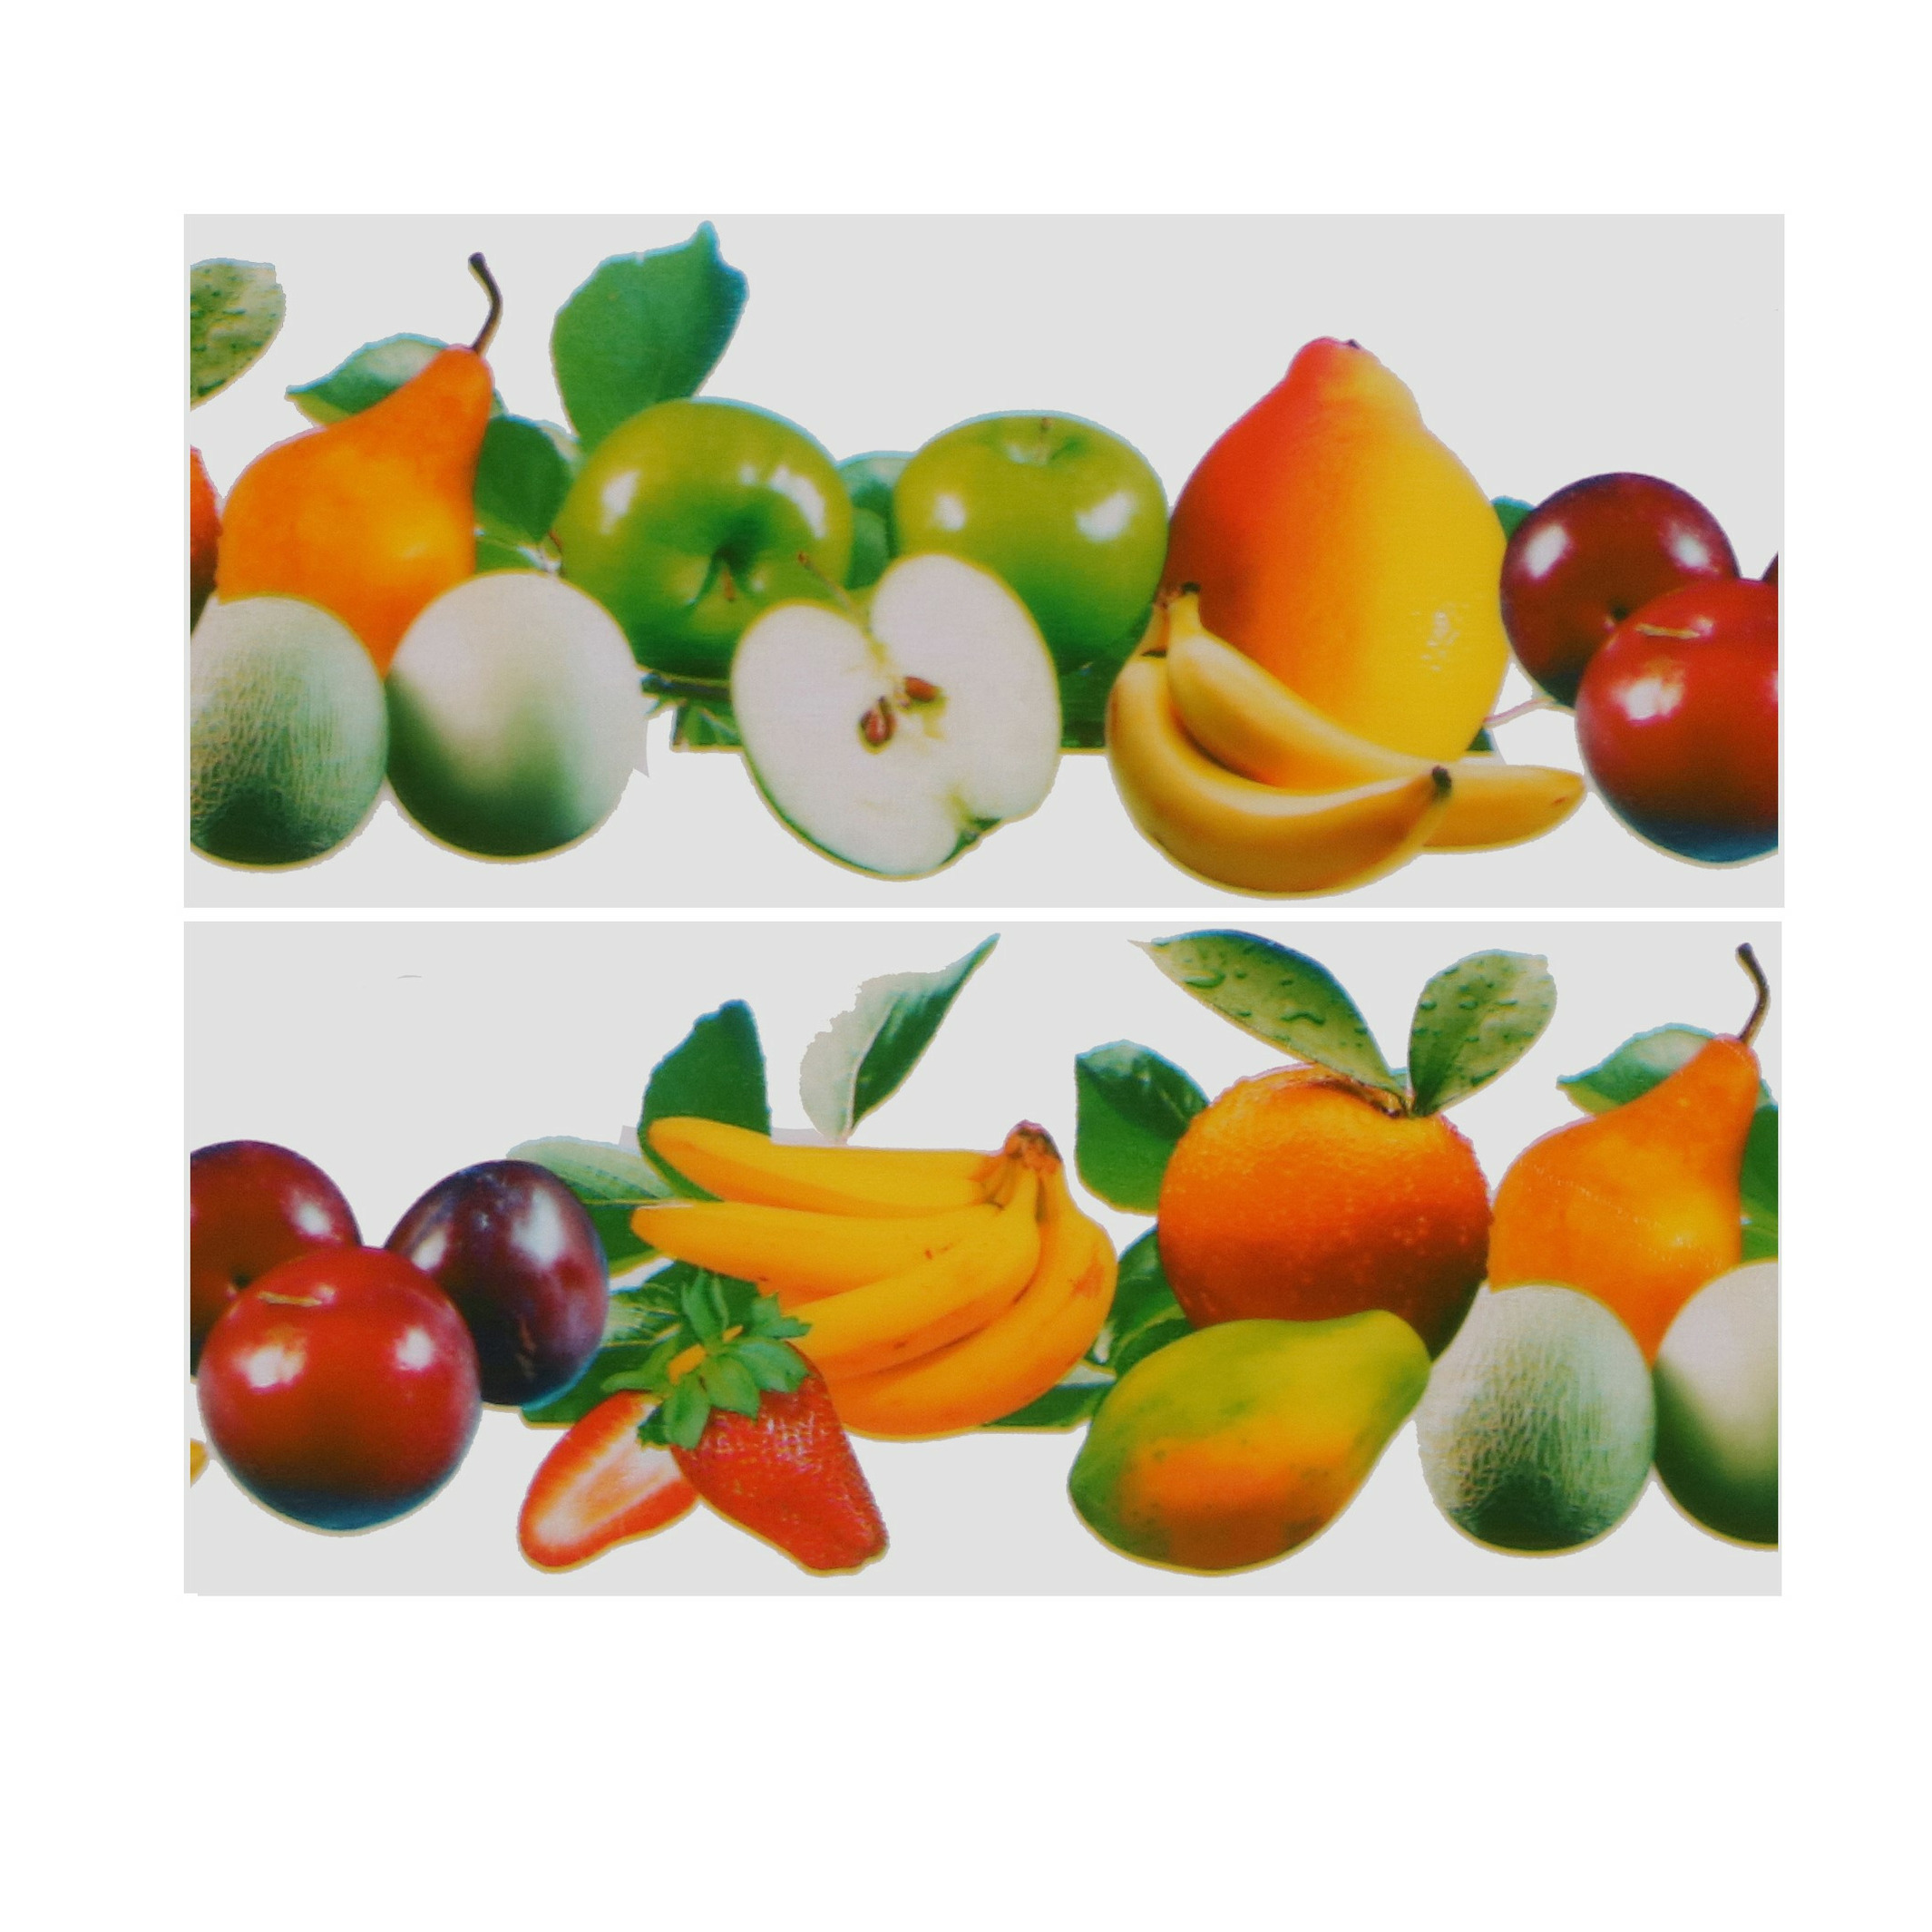 Fruitvliegjes val fruit raamstickers 3x stickers ongedierte bestrijding